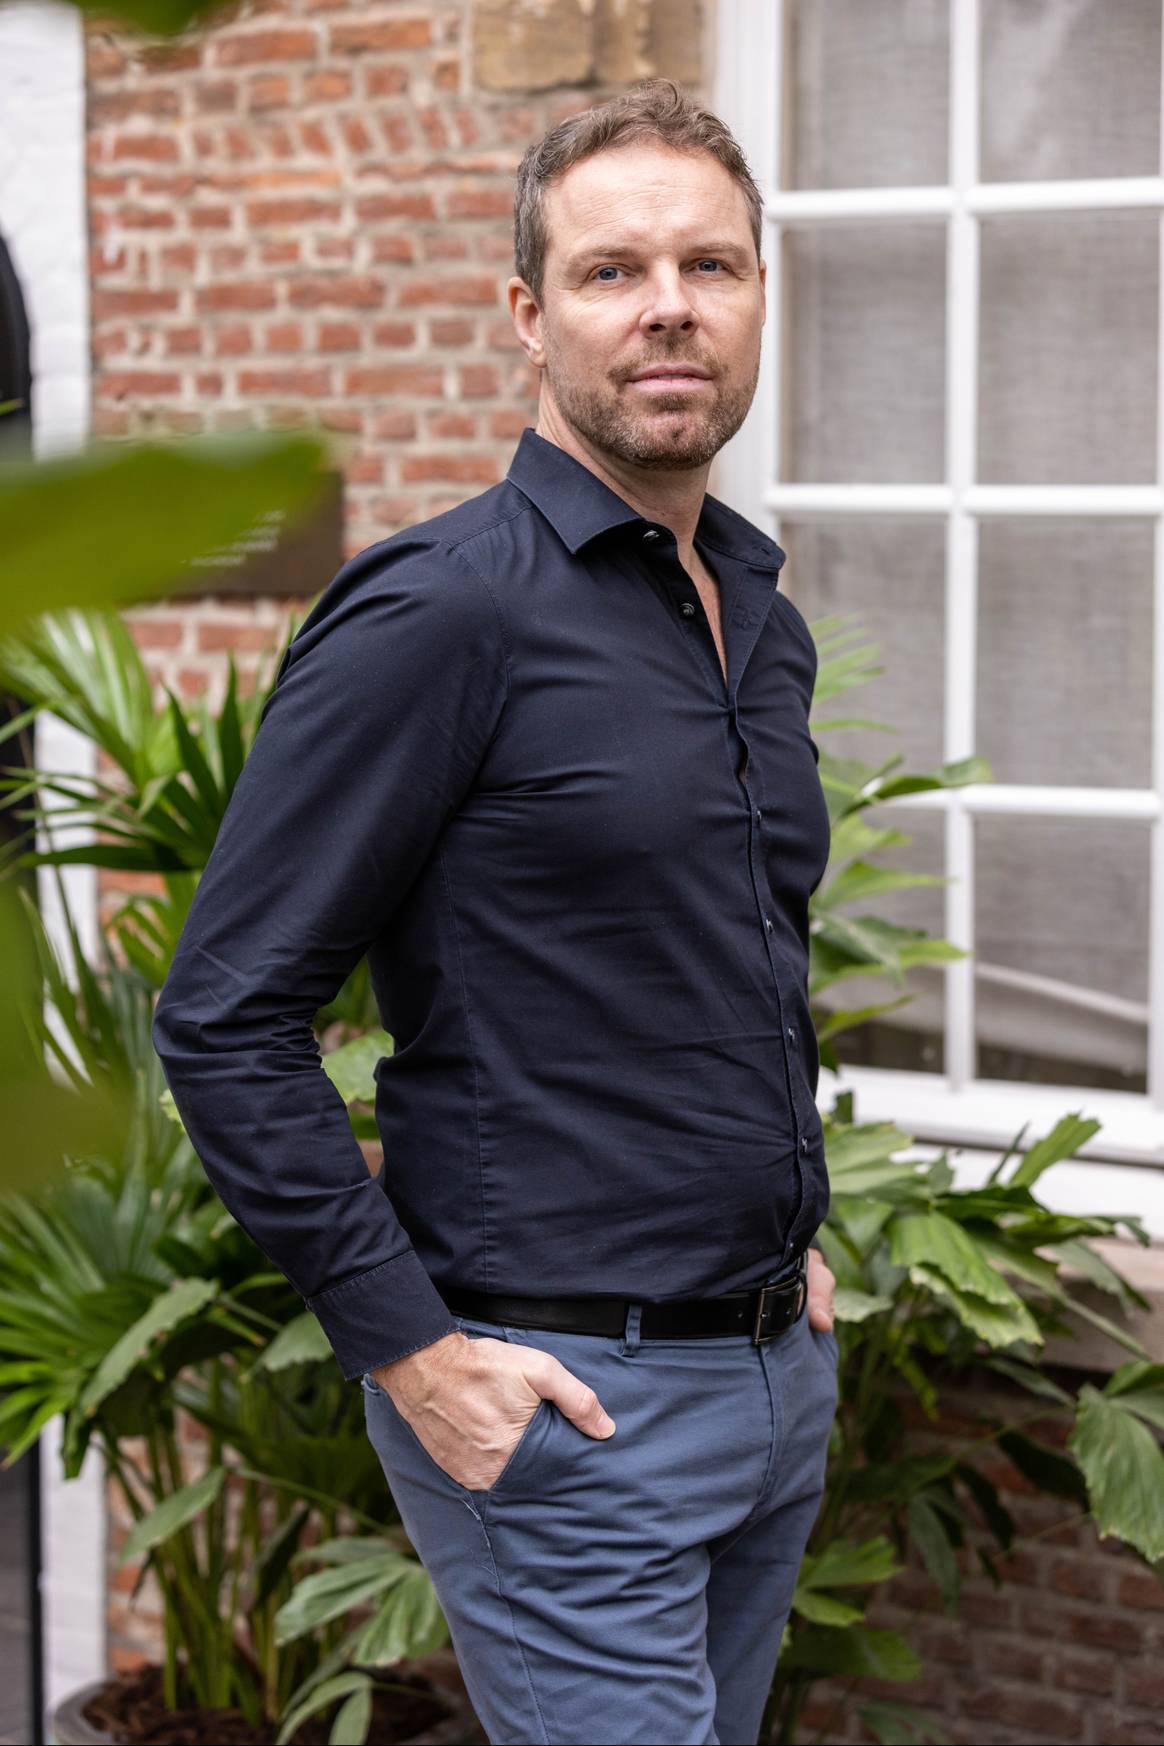 Erik Troost, L'Oréal's director of corporate communication,
engagement and sustainability. Image: L'Oréal Group